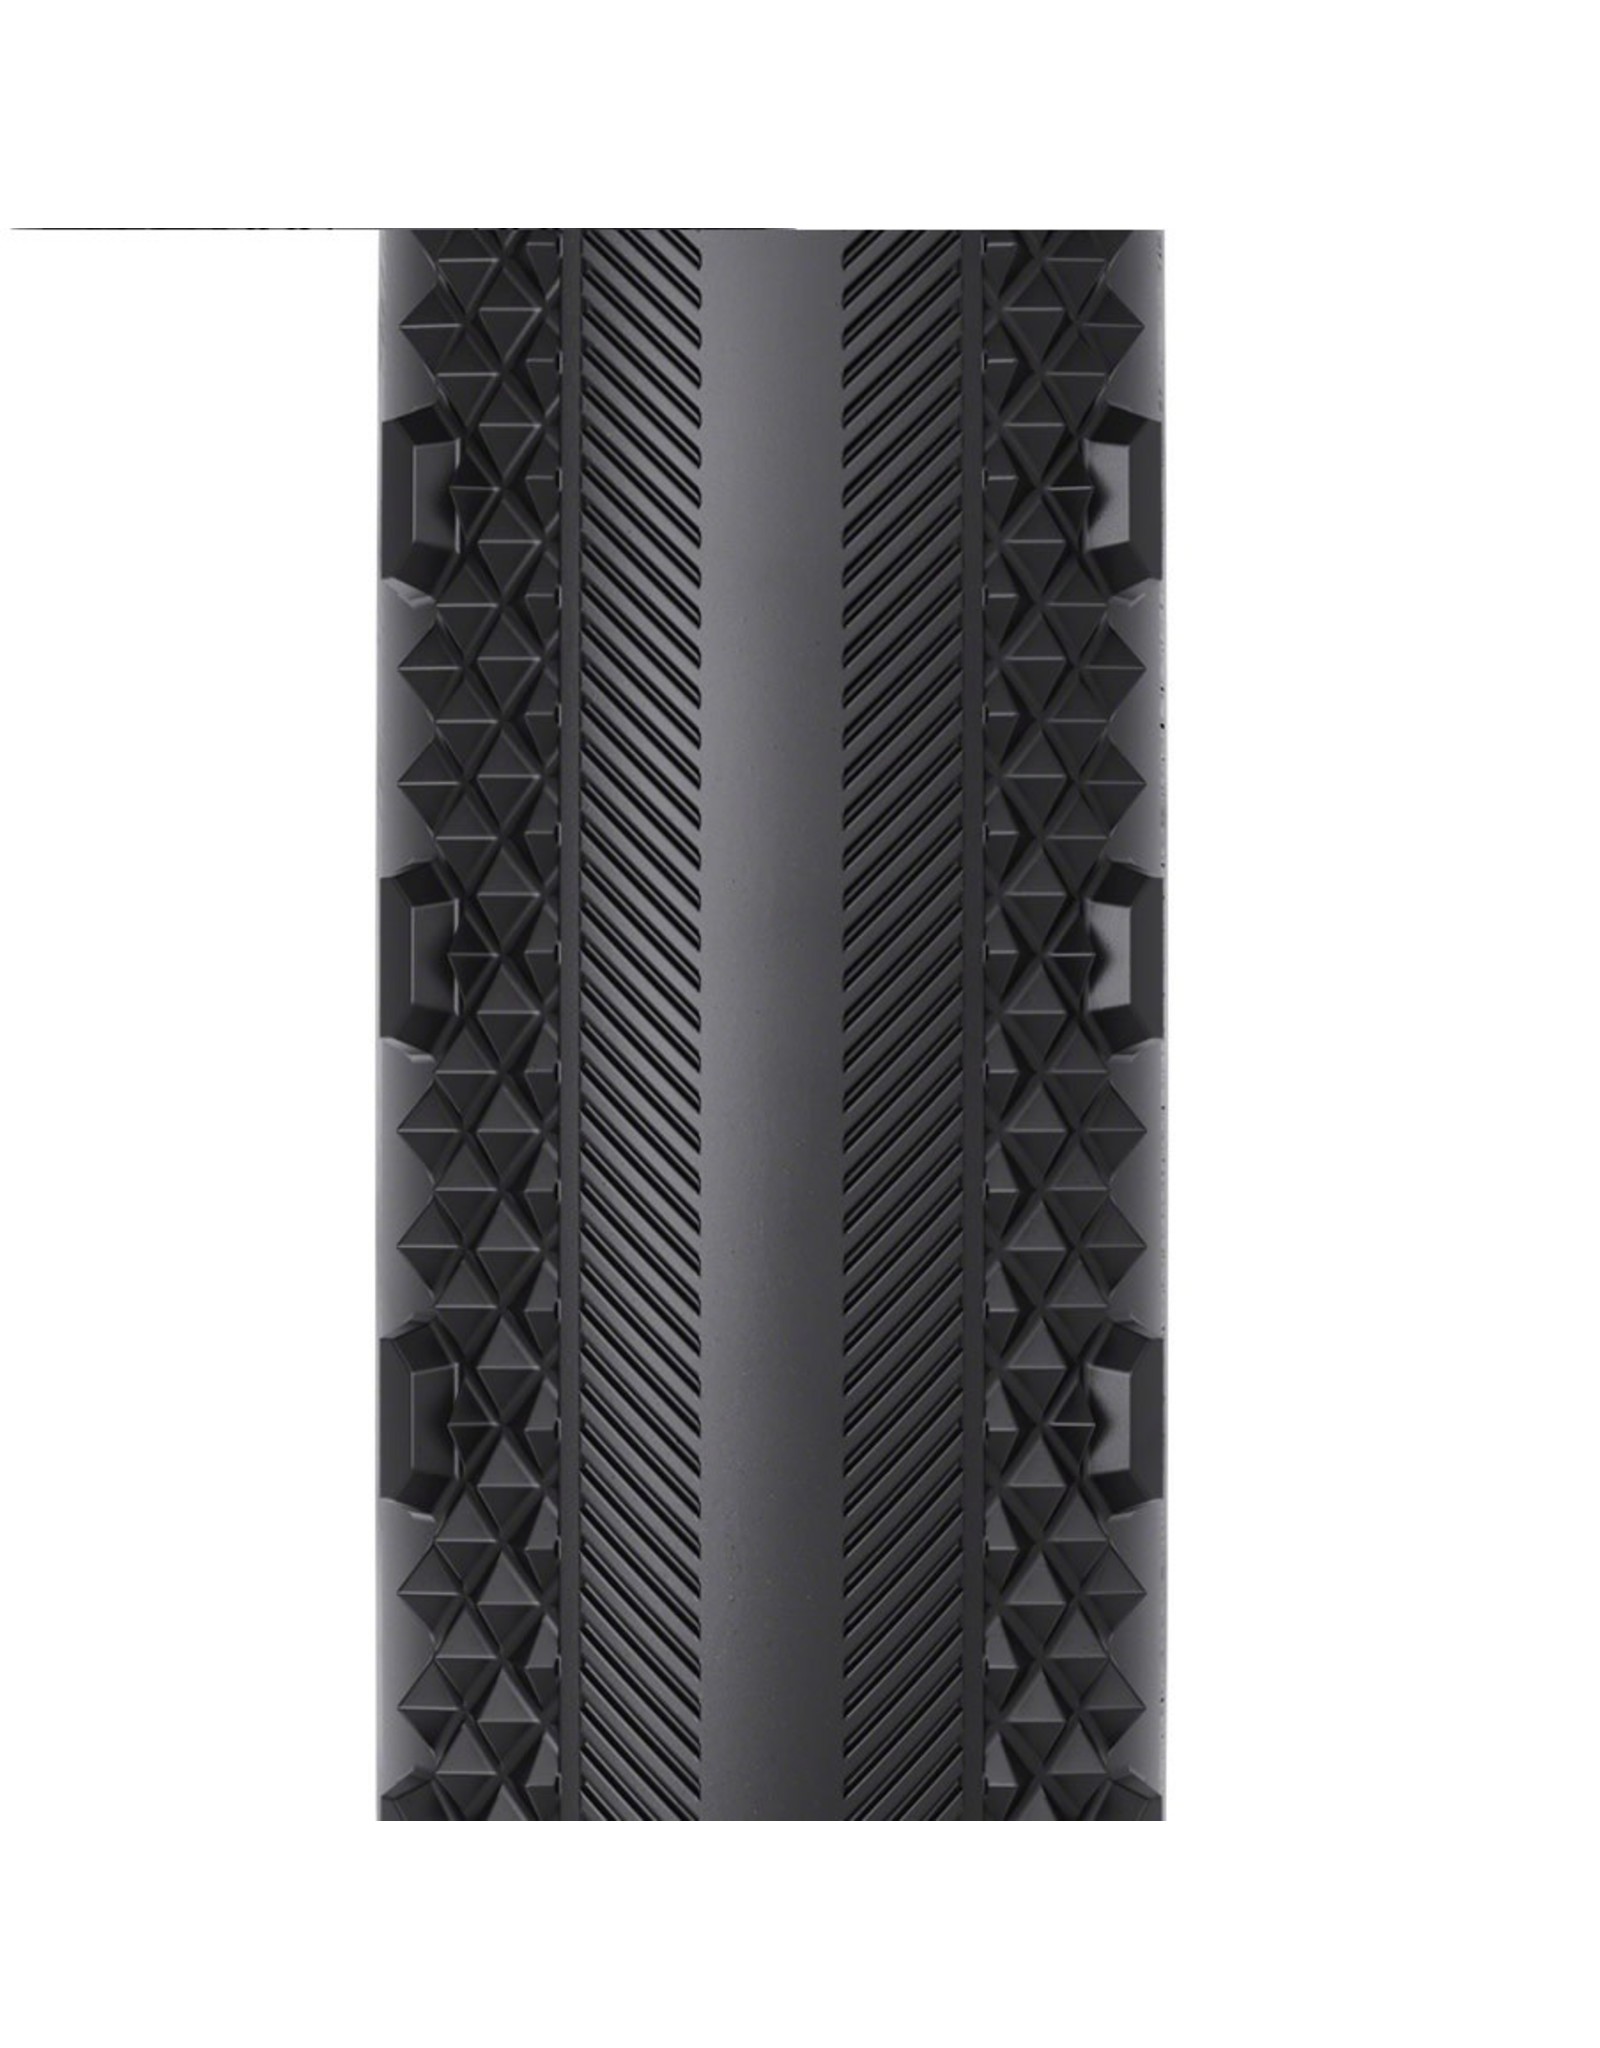 650b tubeless tires